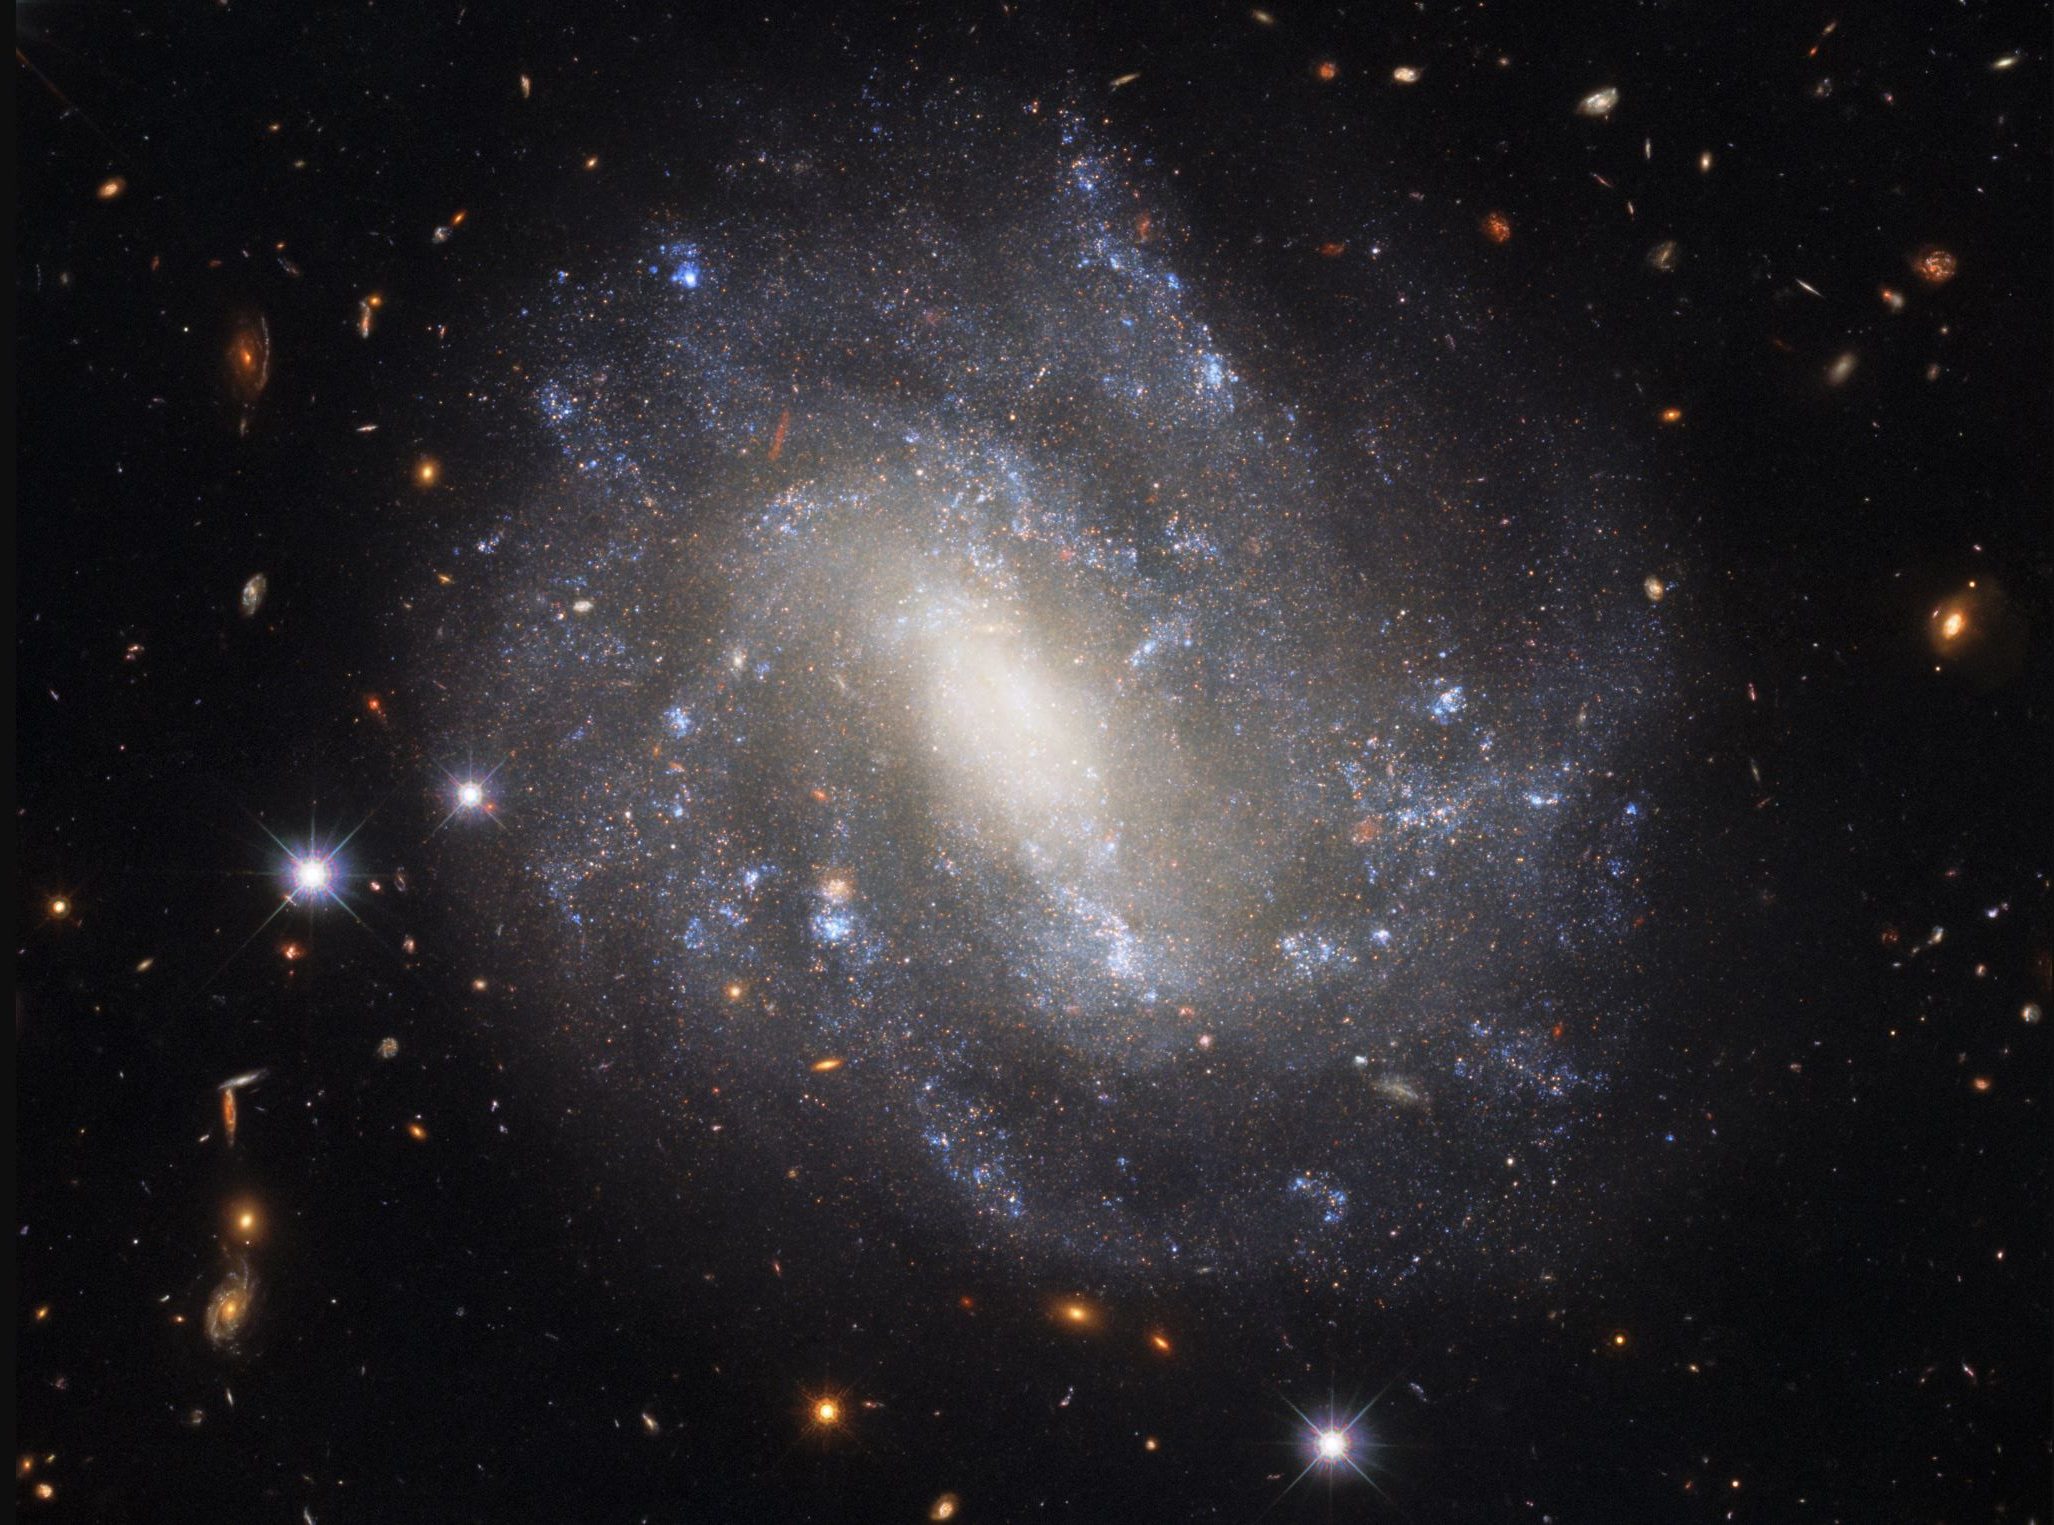 UGC 9391 by Hubble. Image credit: ESA/Hubble & NASA, A. Riess et al.